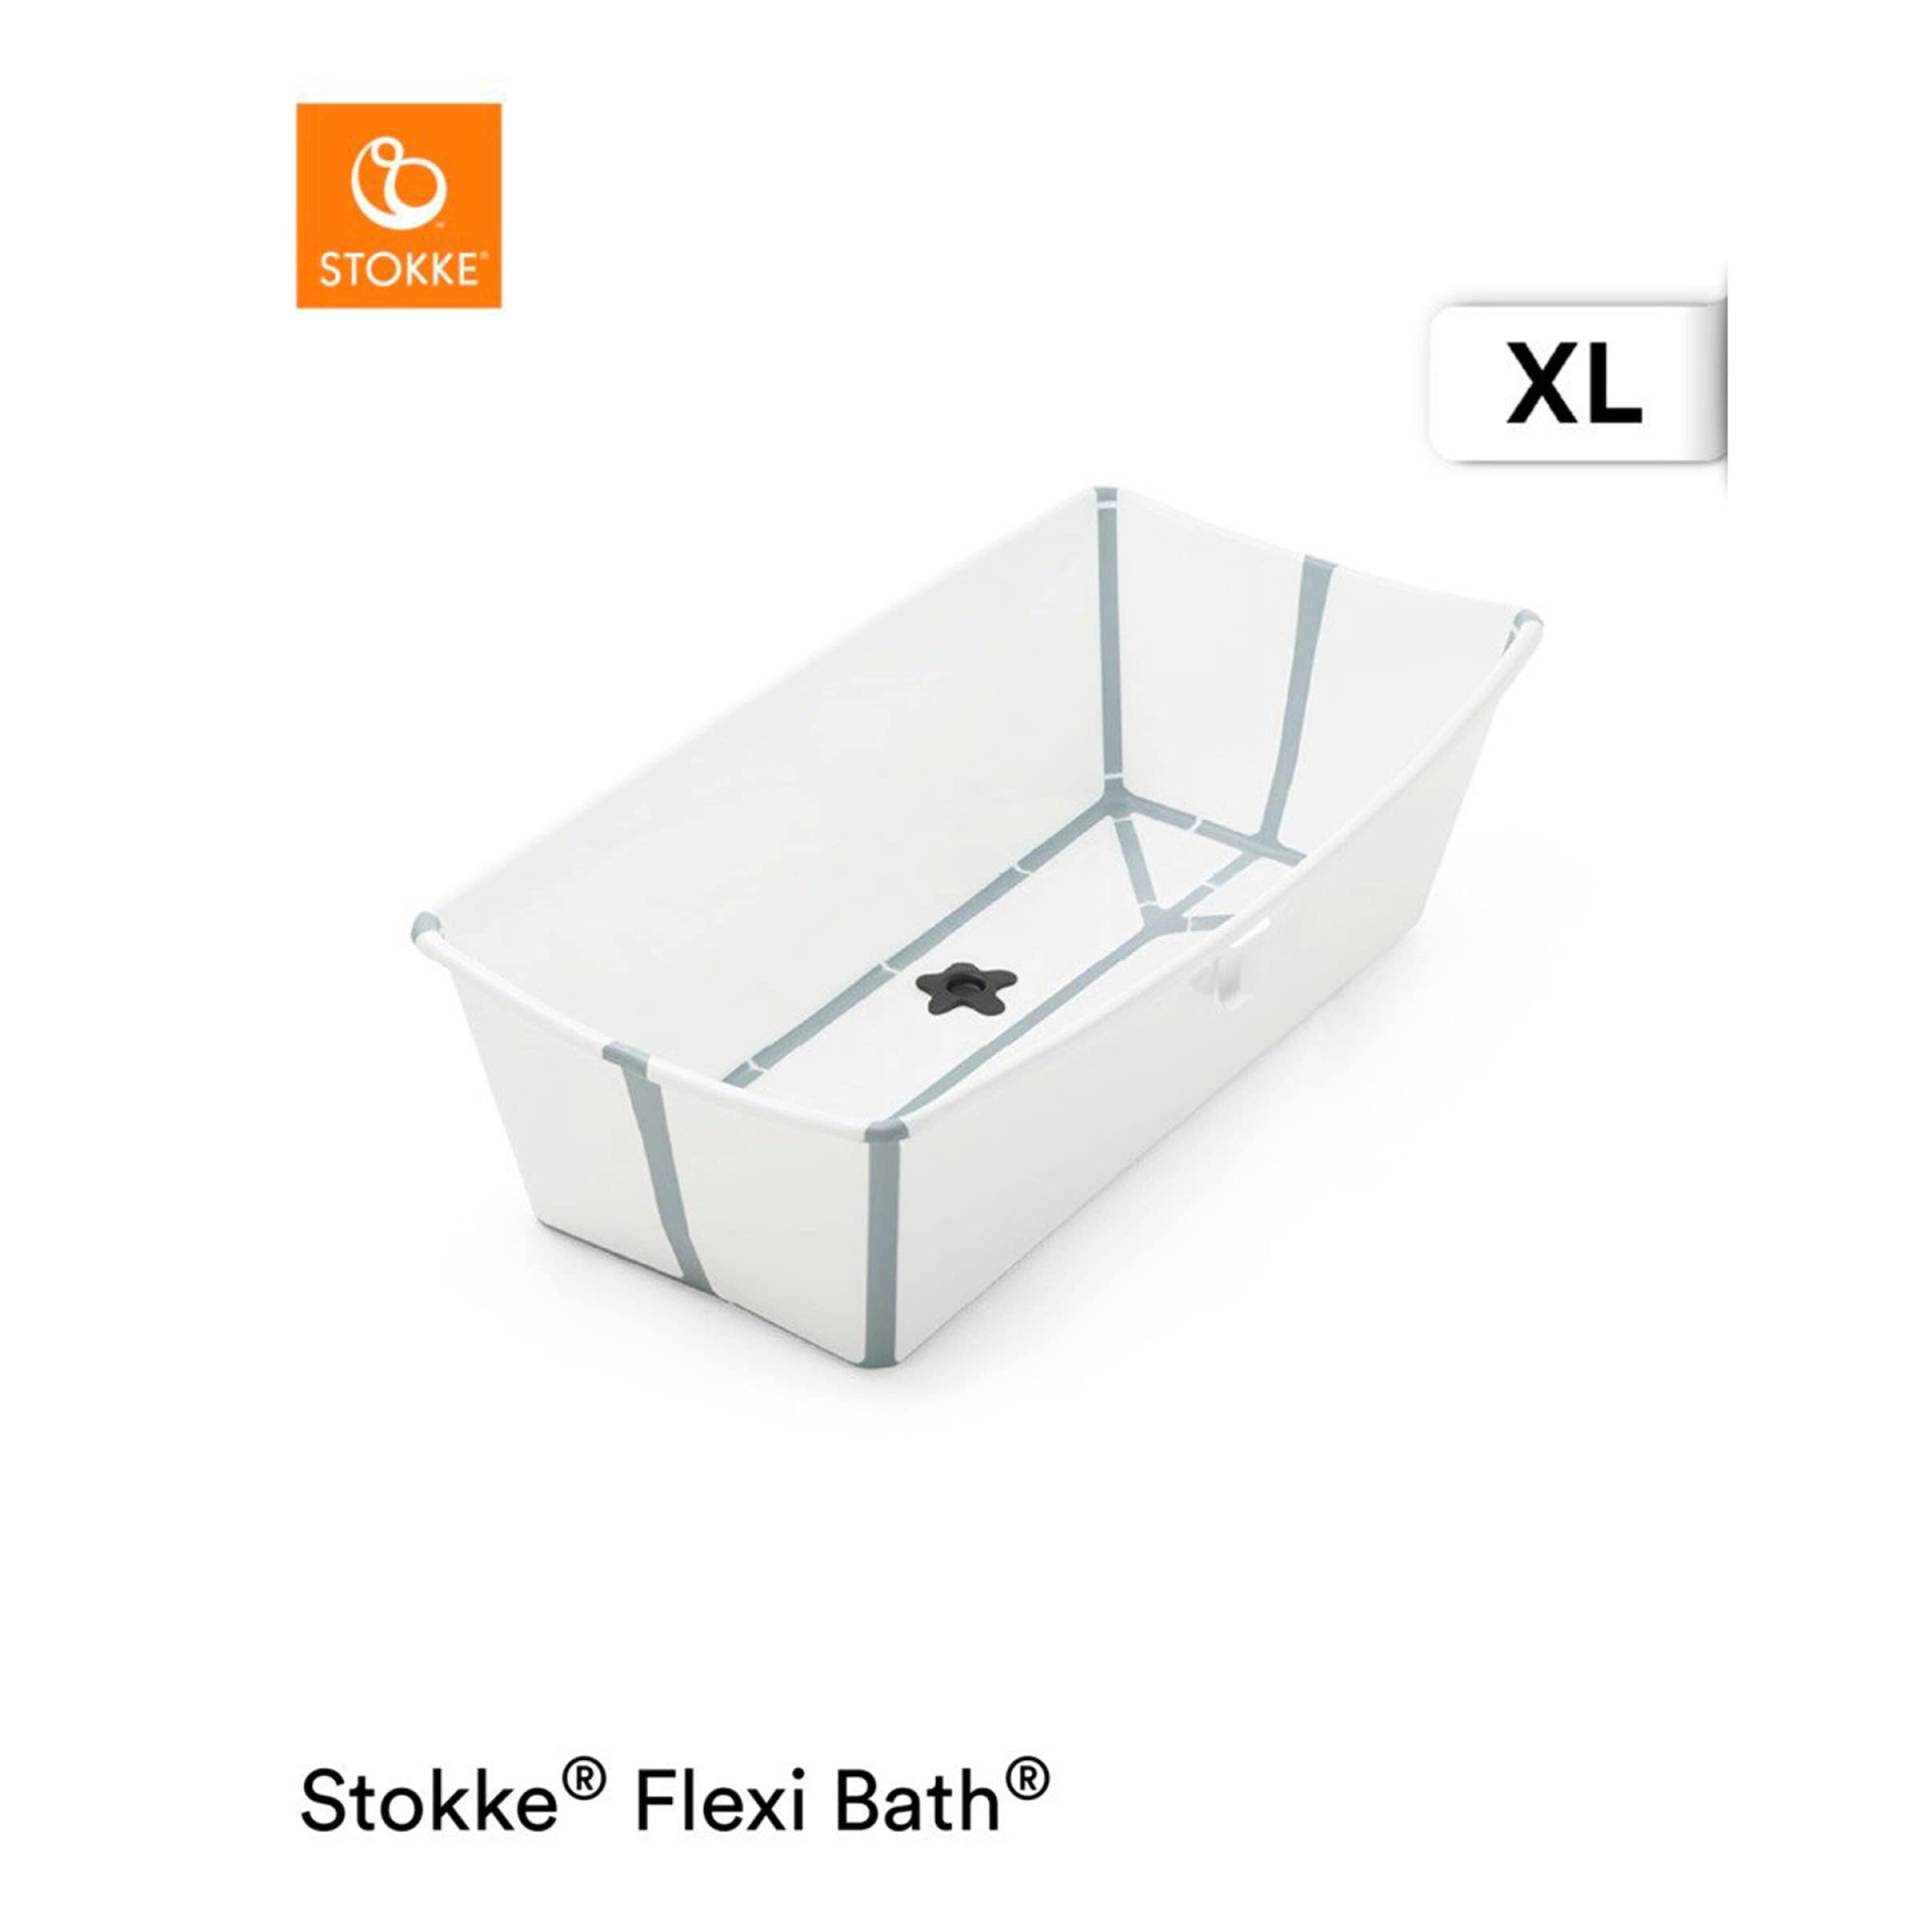 Stokke® Flexibath Badewanne XL von Stokke